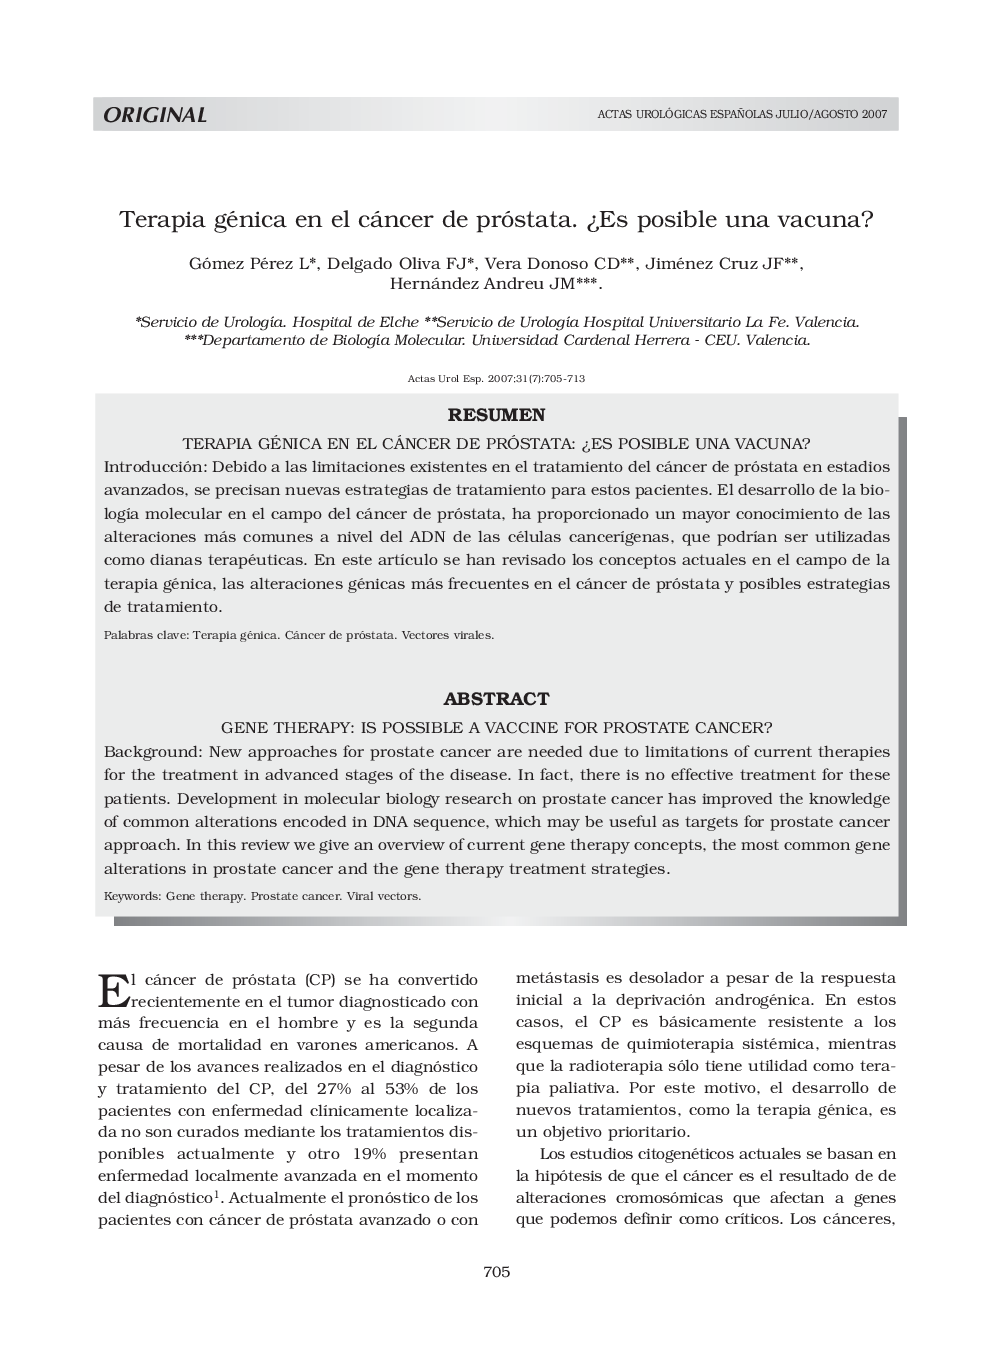 Terapia génica en el cáncer de próstata. Â¿Es posible una vacuna?Gene therapy:is possible a vaccine for prostate cancer?